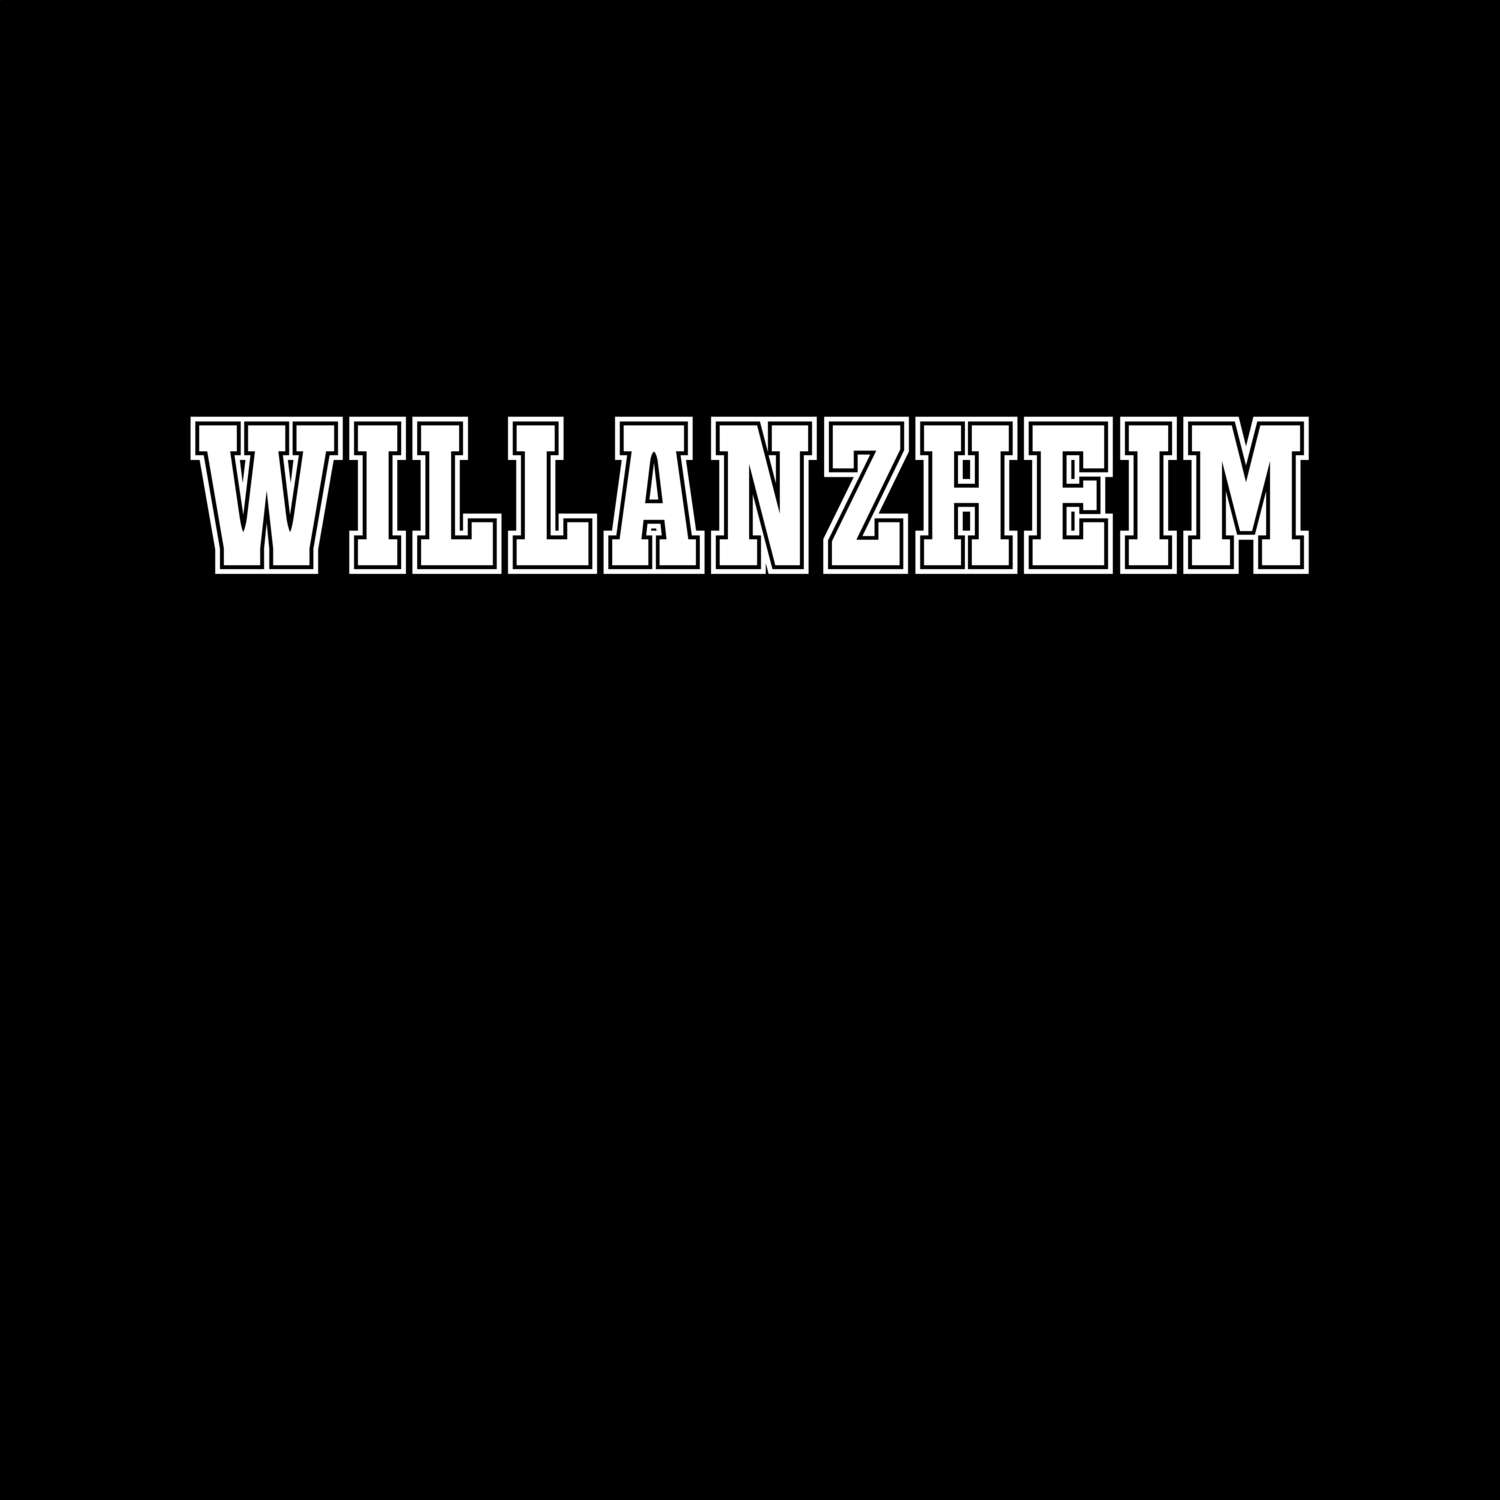 Willanzheim T-Shirt »Classic«